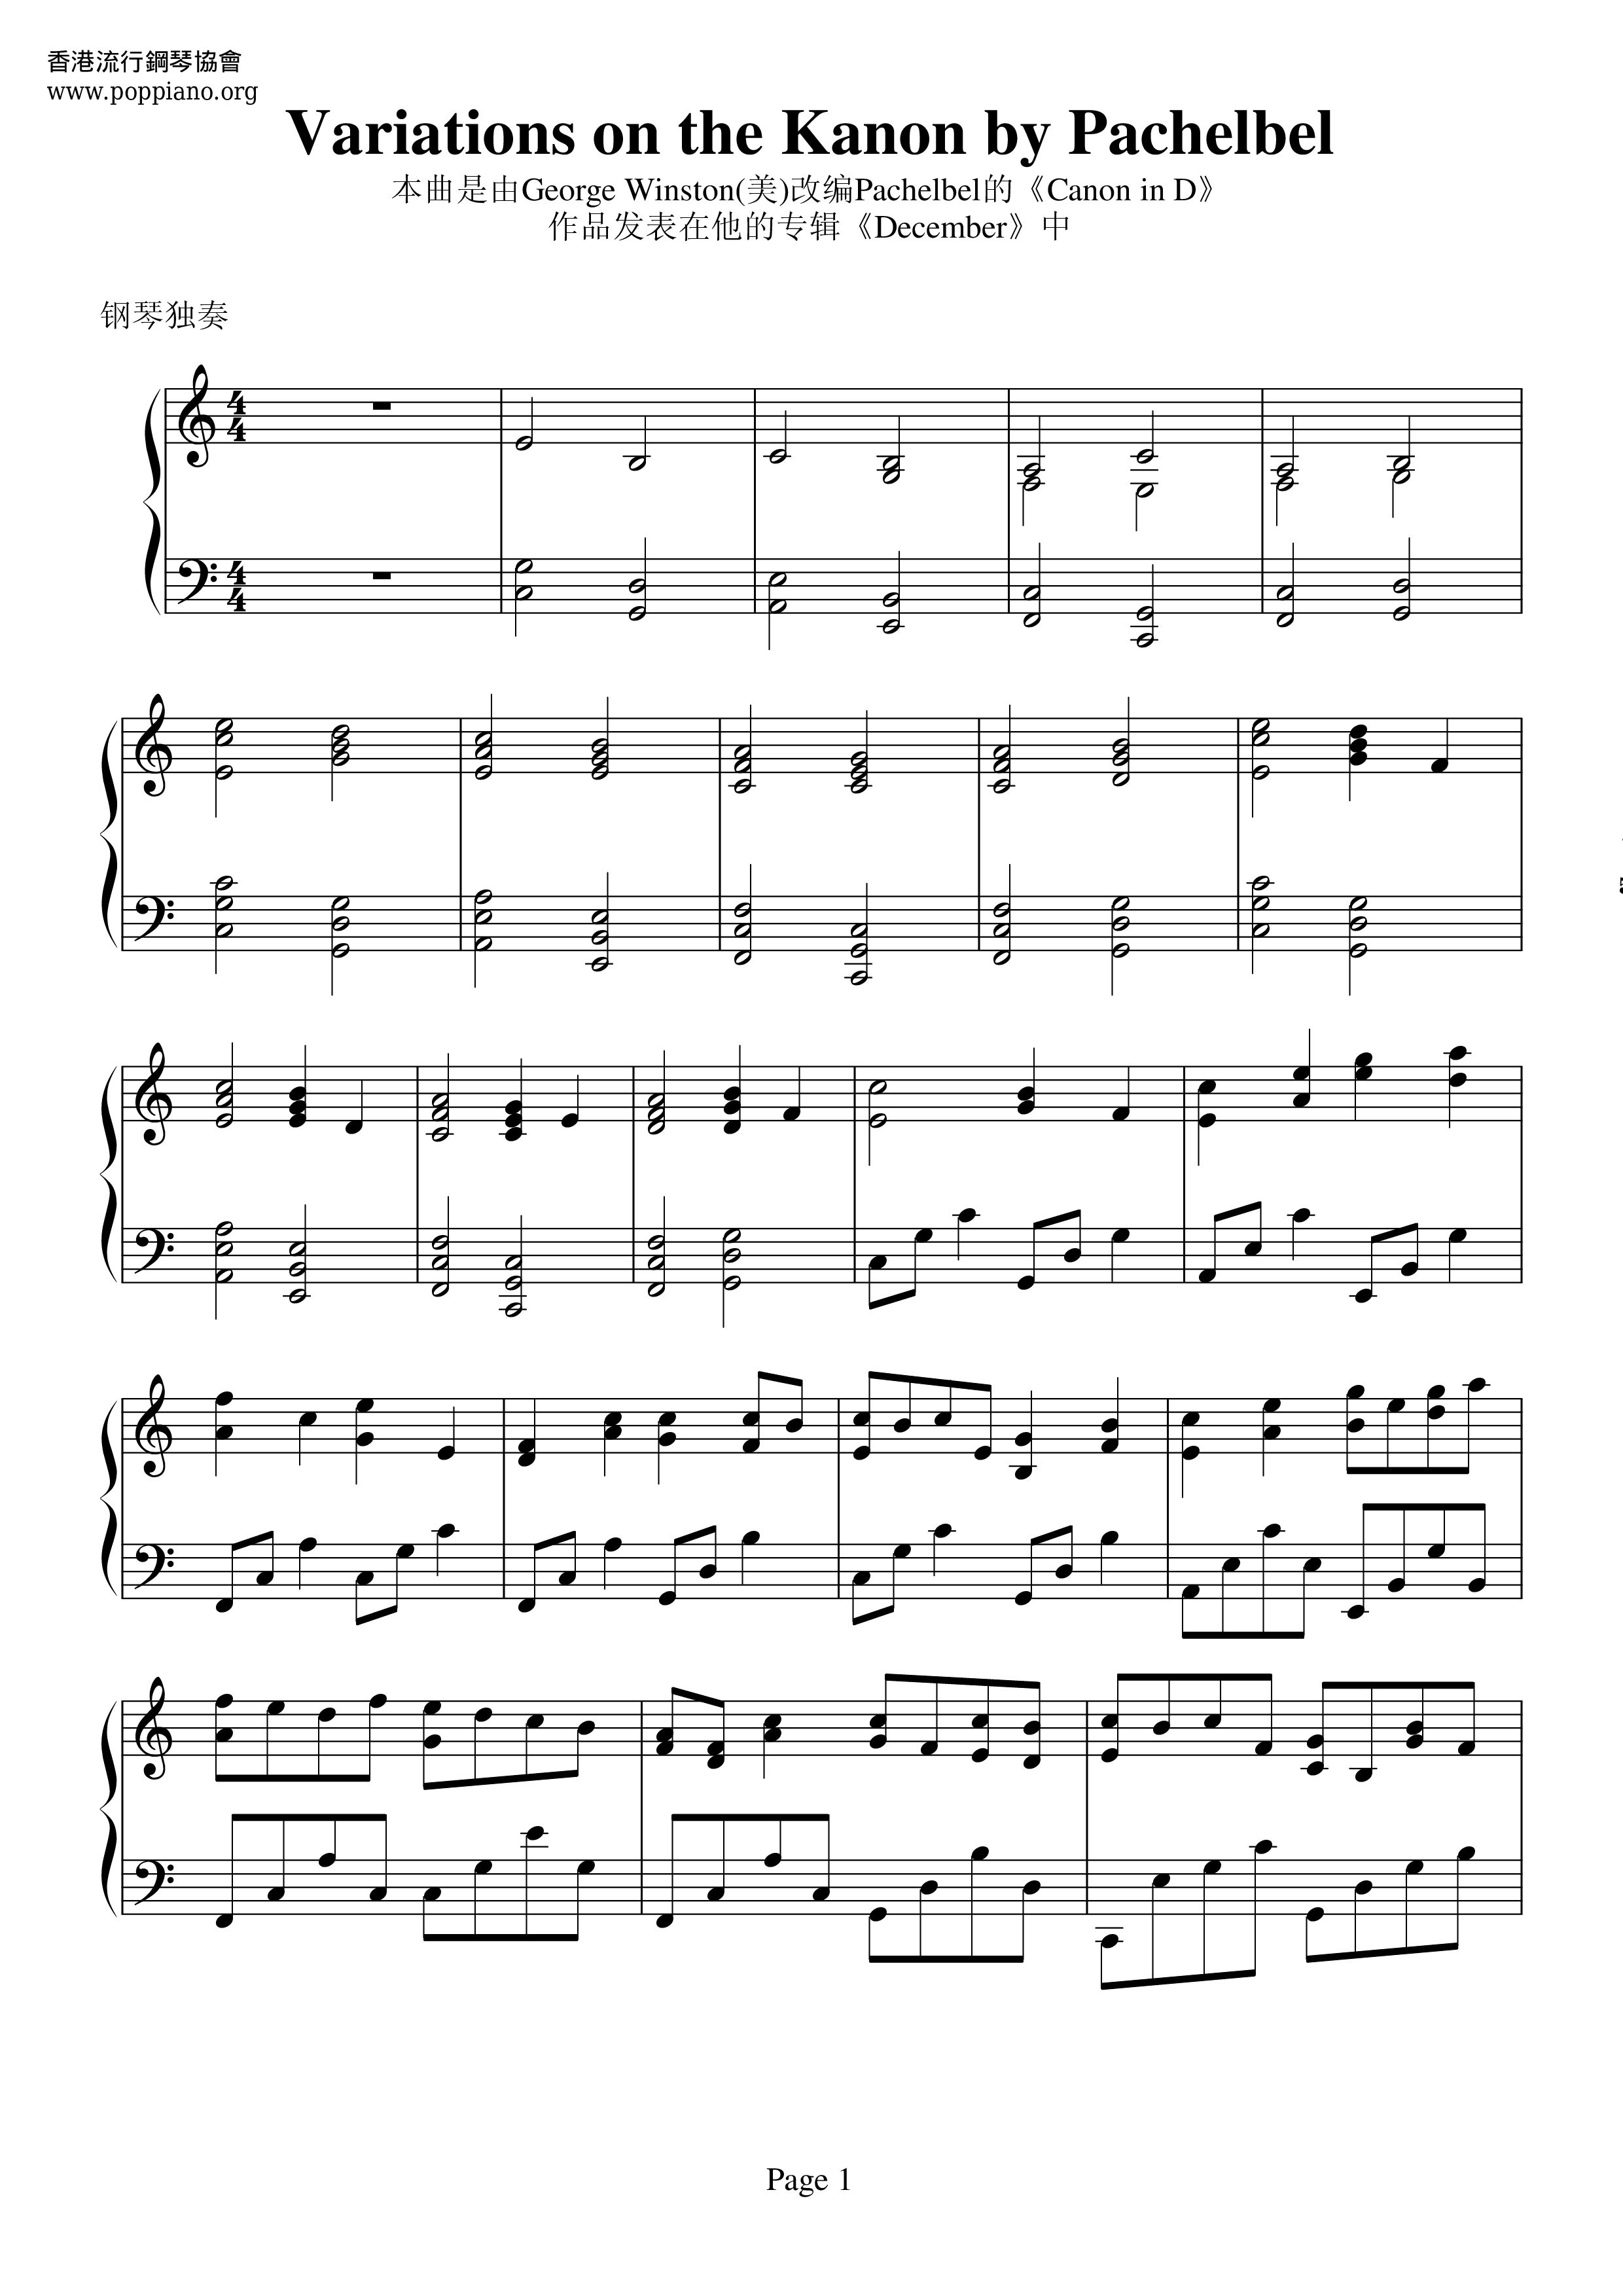 Variations On Canonピアノ譜